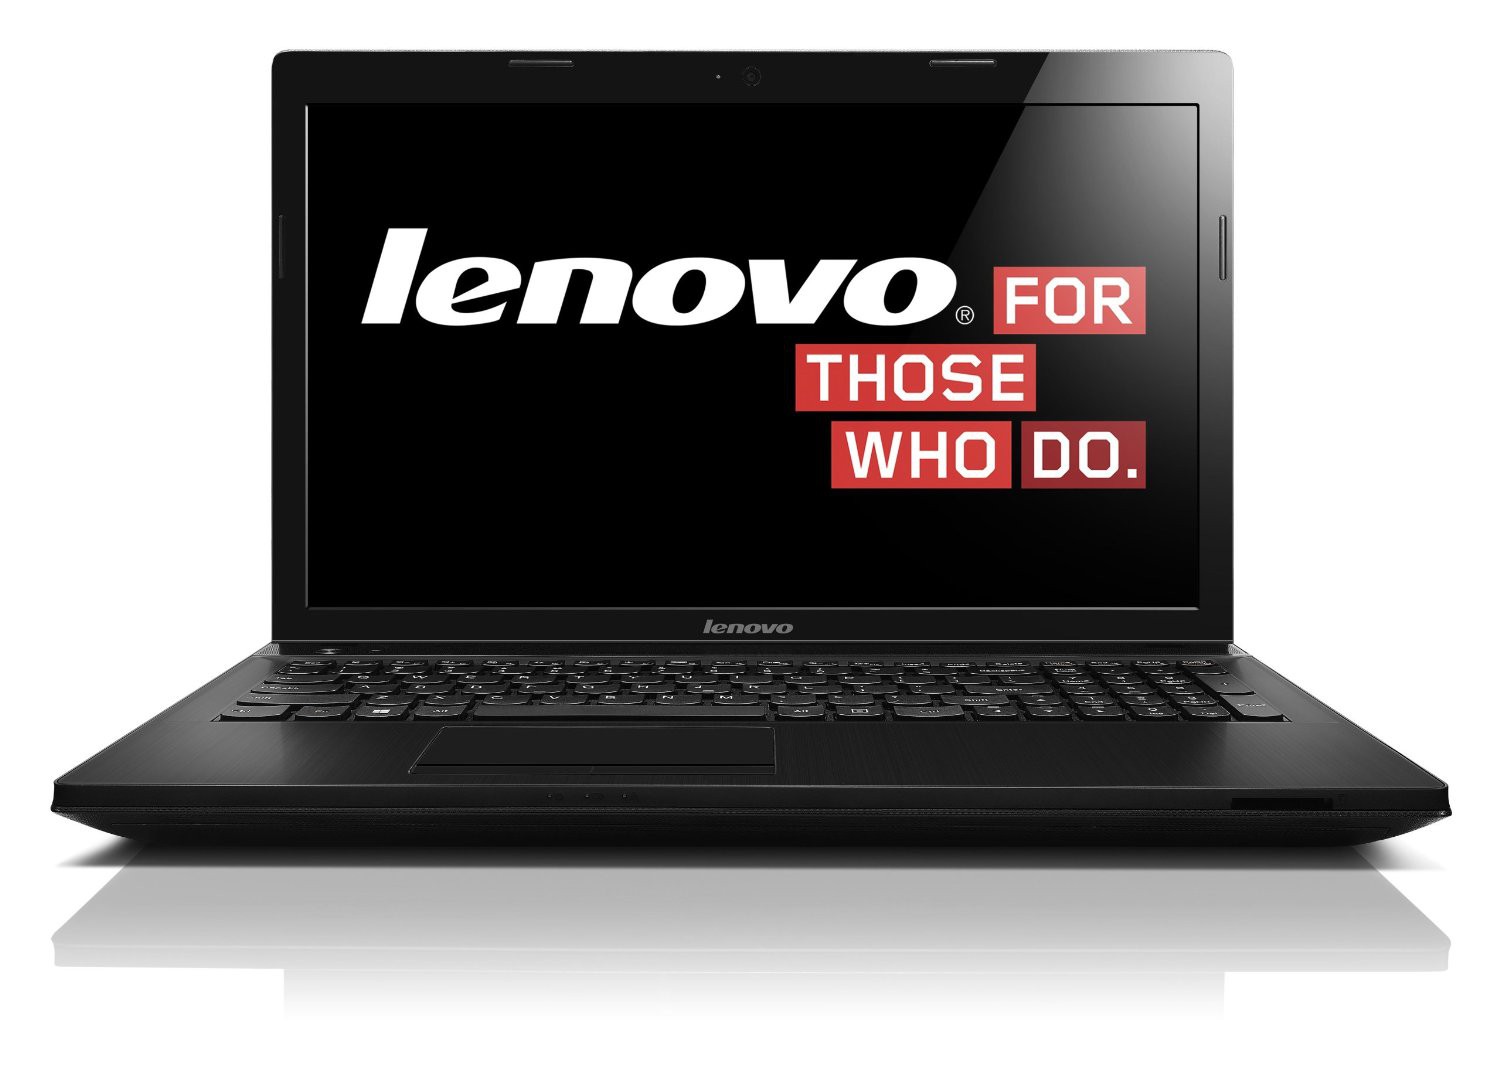 Fikir değer komşu  Lenovo G5080 core i3 4Gb ram 500GB Hard disk 15.6 inch LED